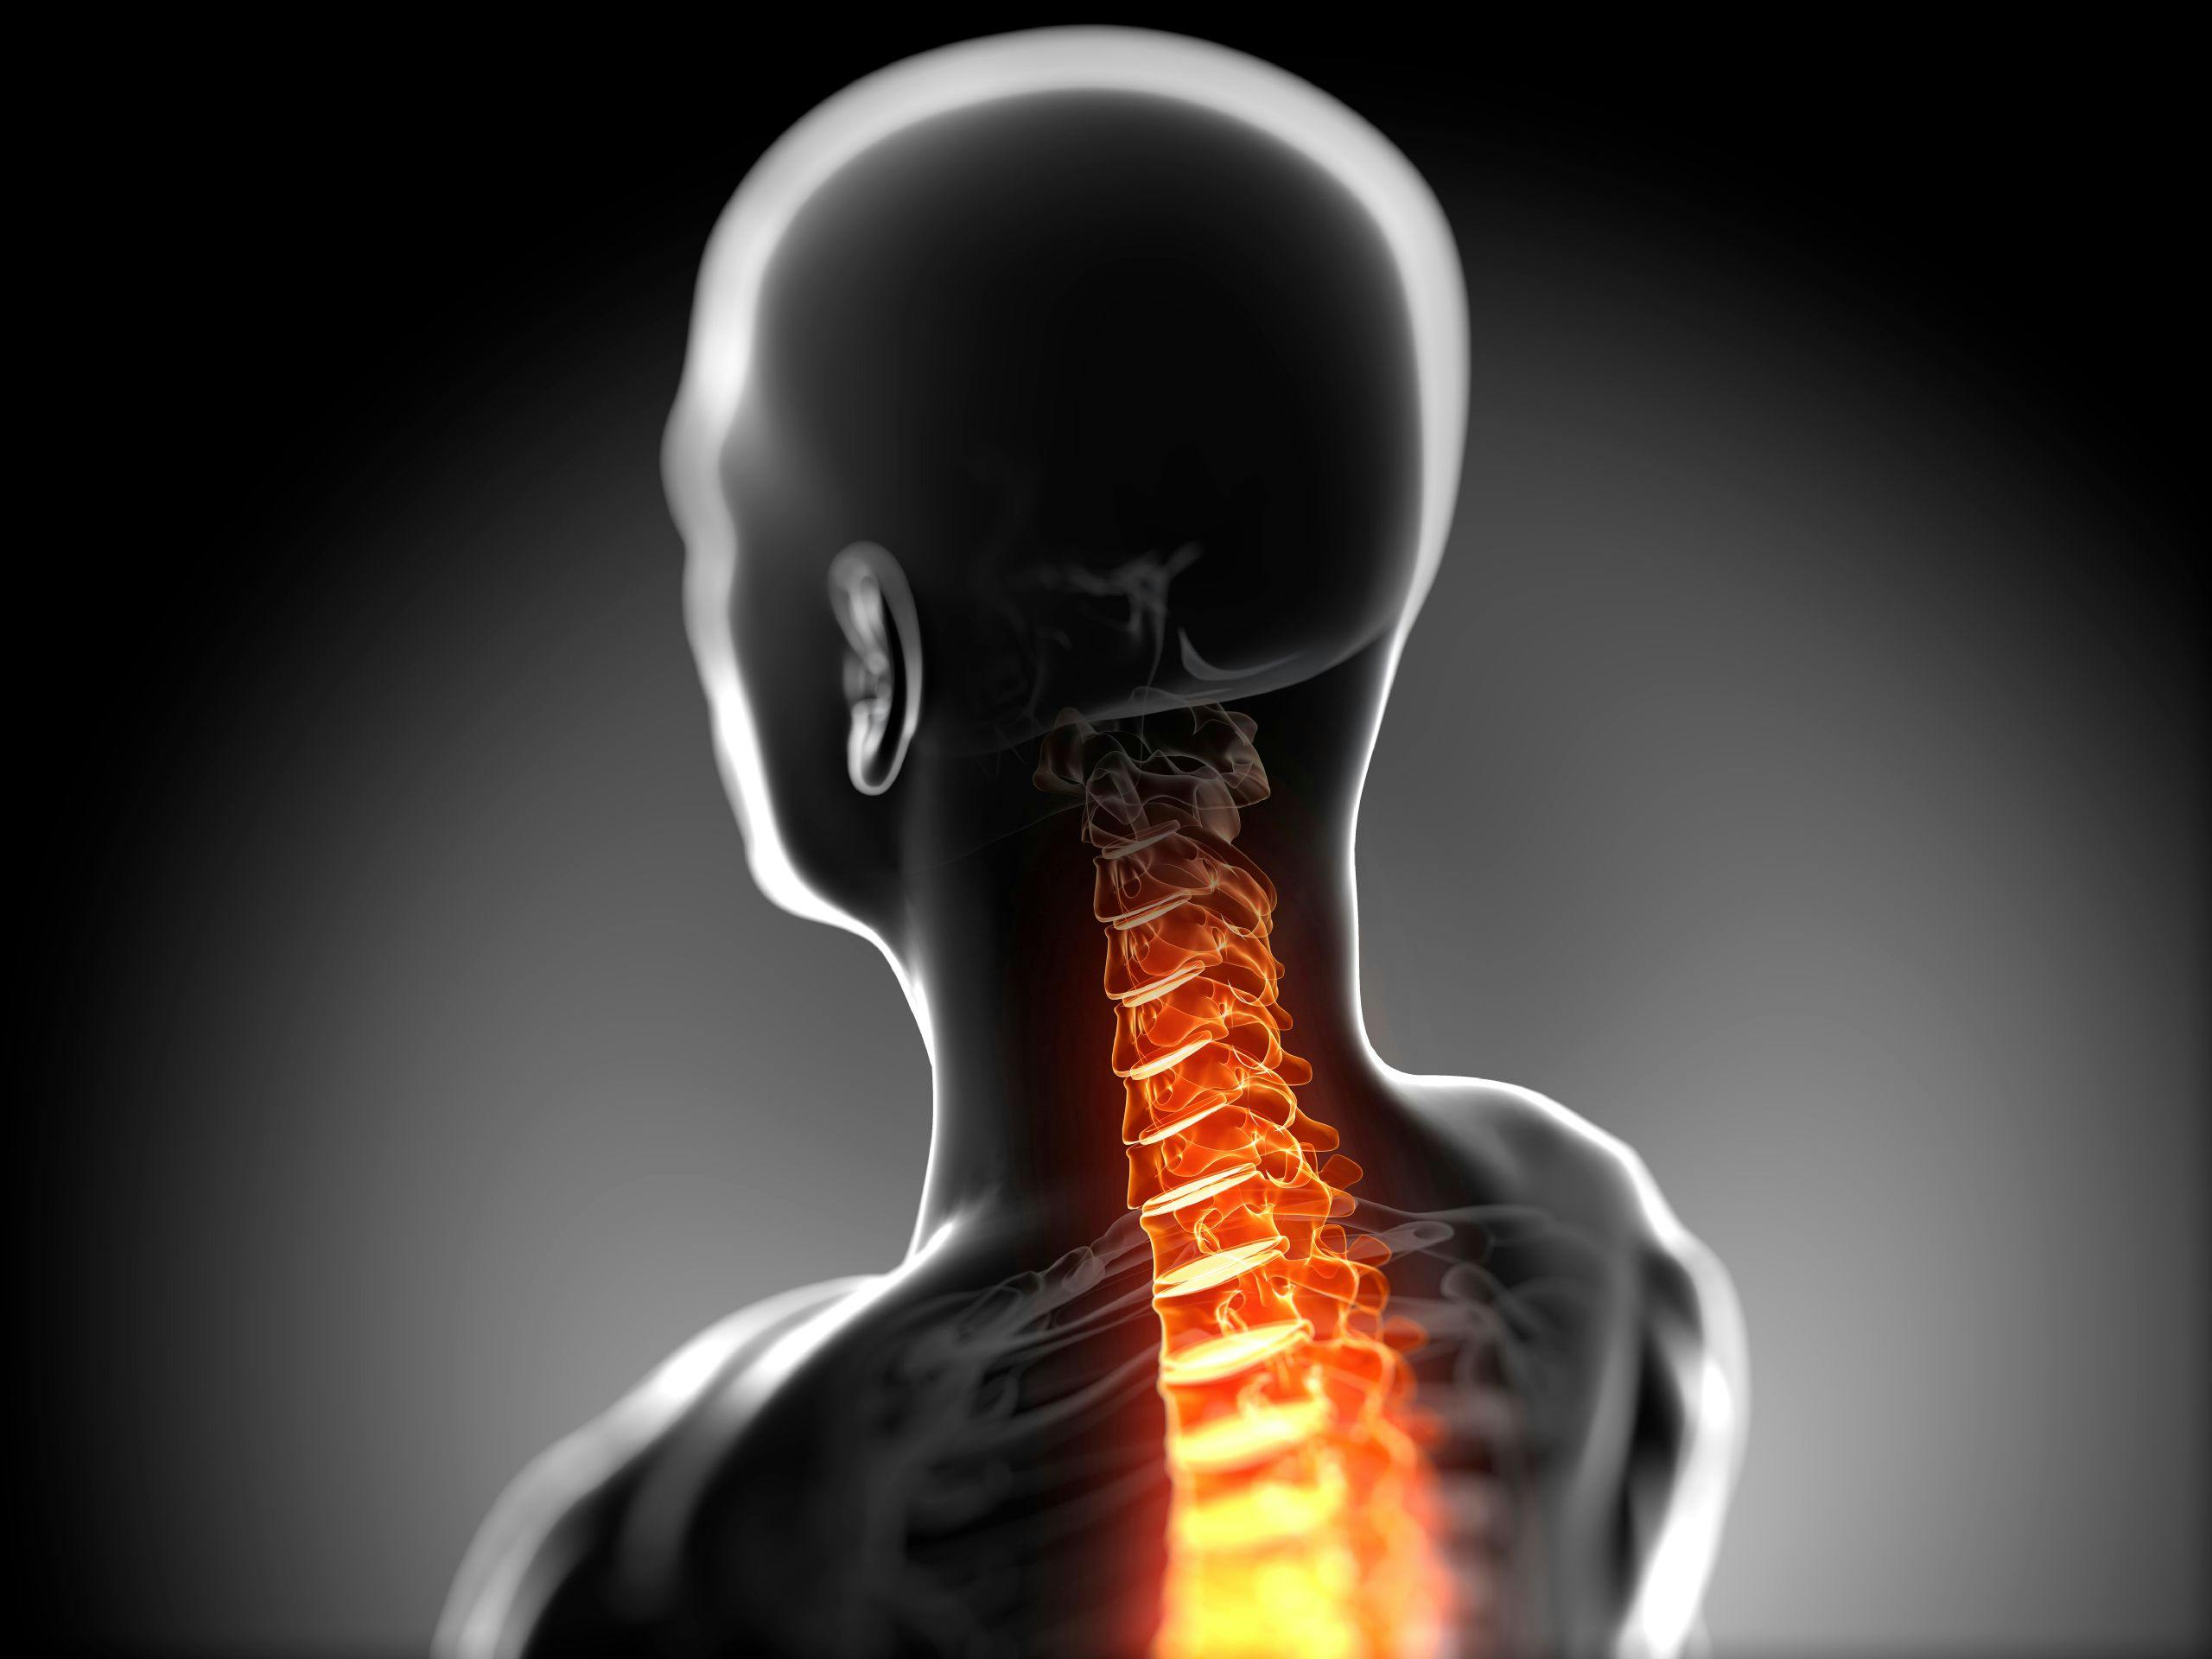 spine graphic